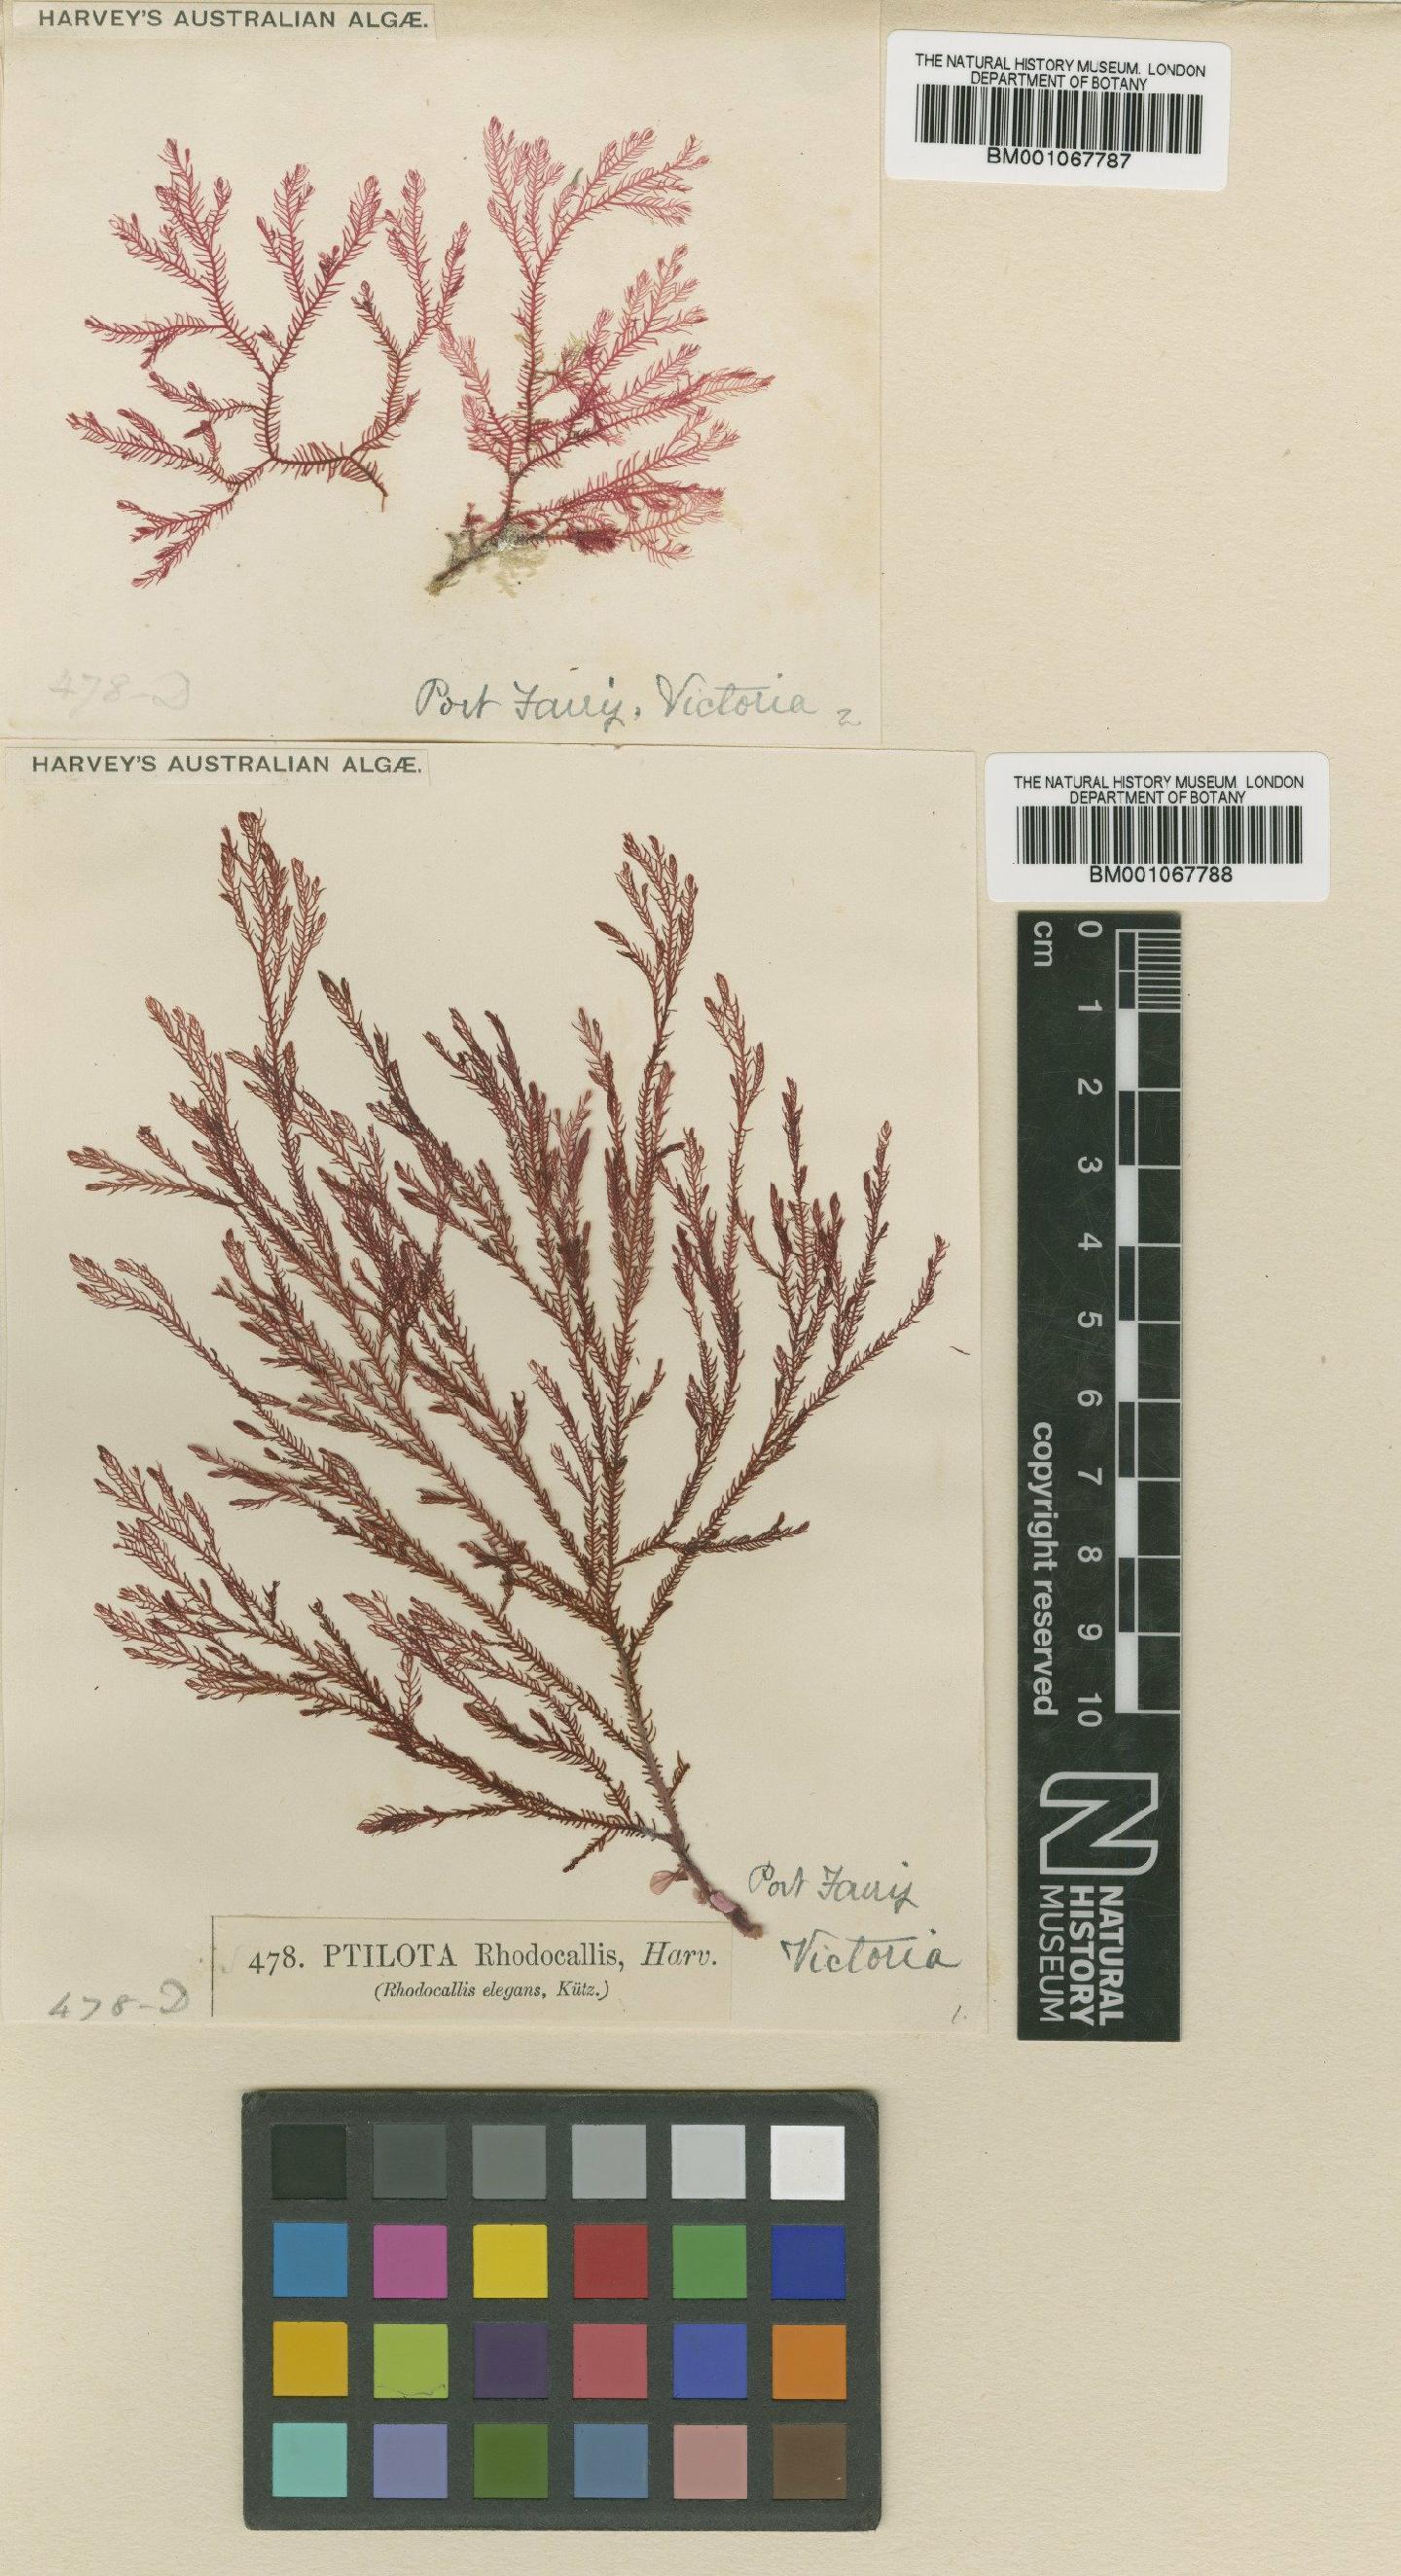 To NHMUK collection (Rhodocallis elegans Kütz.; NHMUK:ecatalogue:2320851)